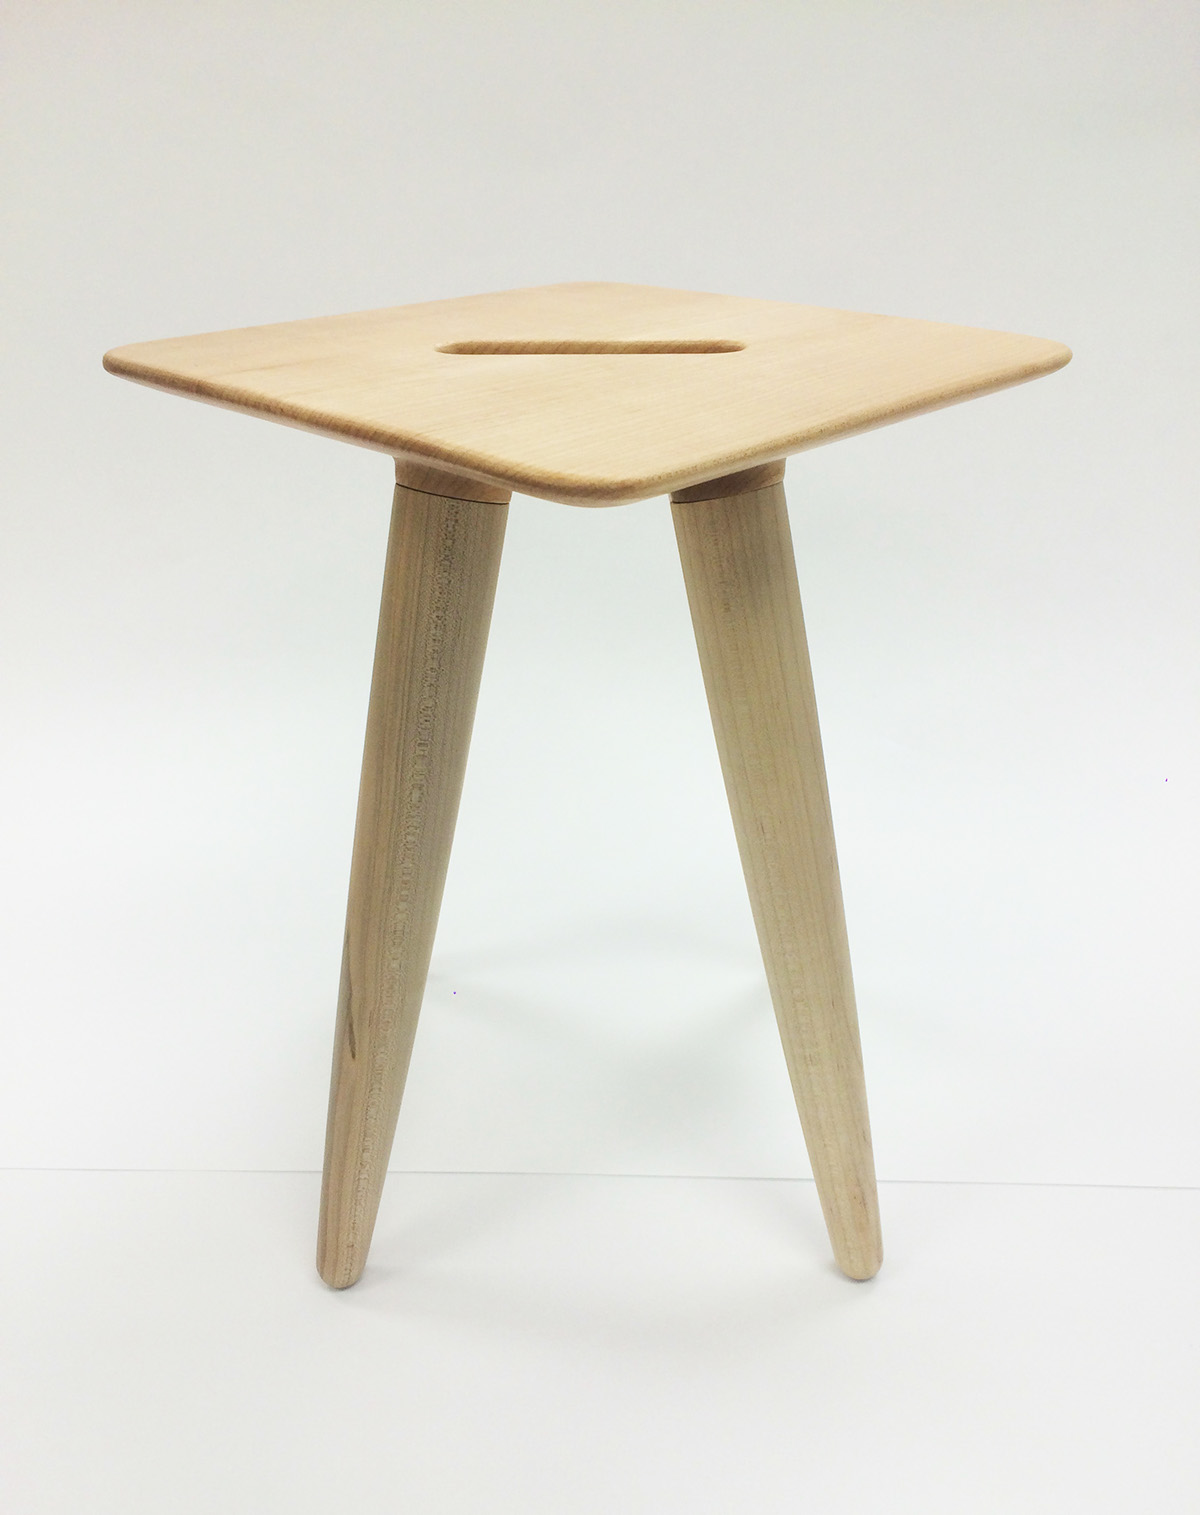 cnc stool maple wood furniture design industrial Solidworks